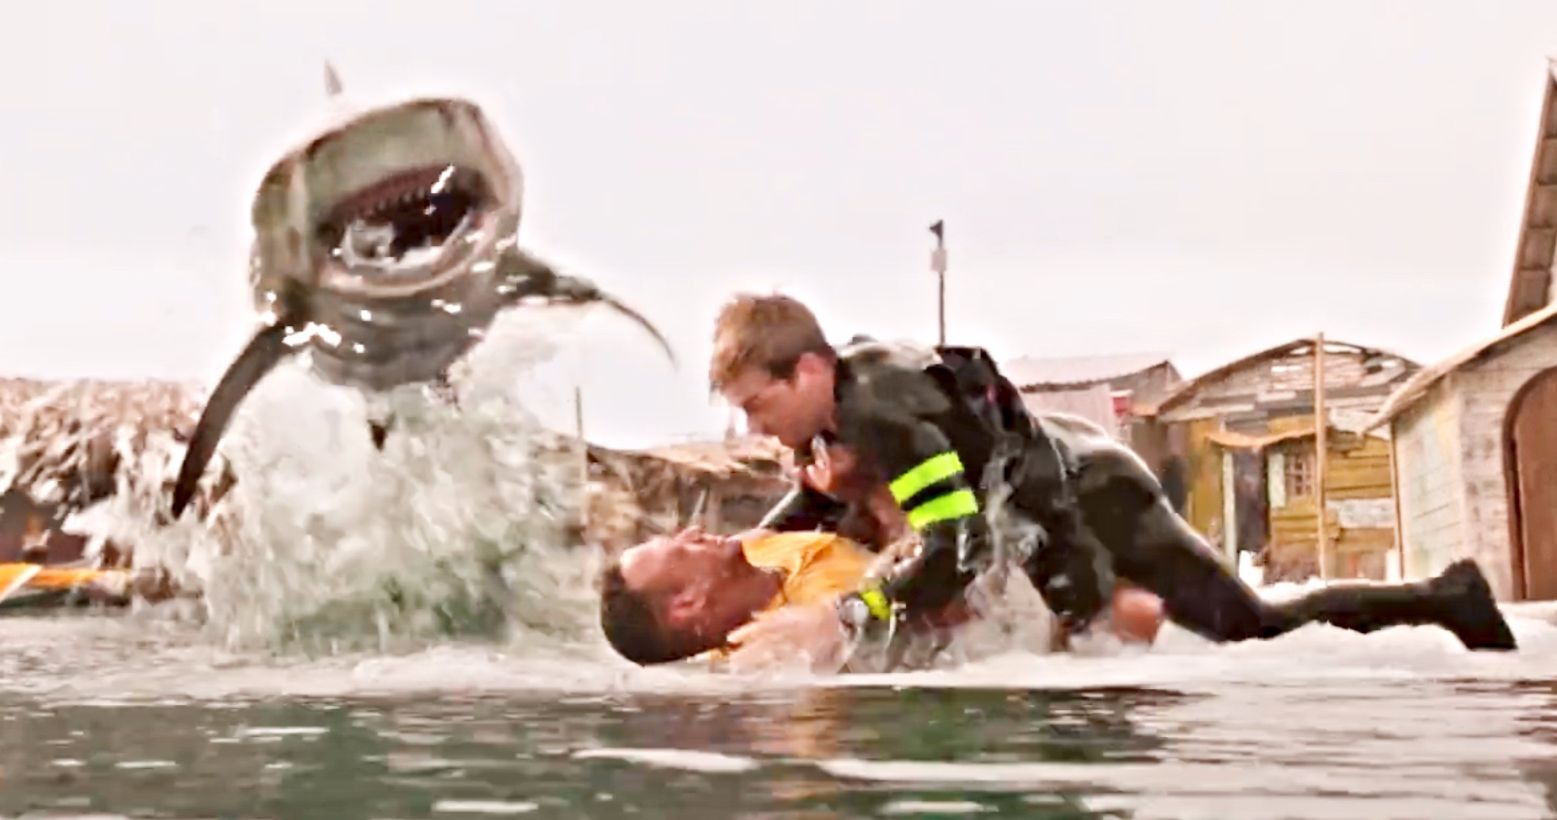 Deep Blue Sea 3 Trailer Brings the Shark Carnage Home This Summer